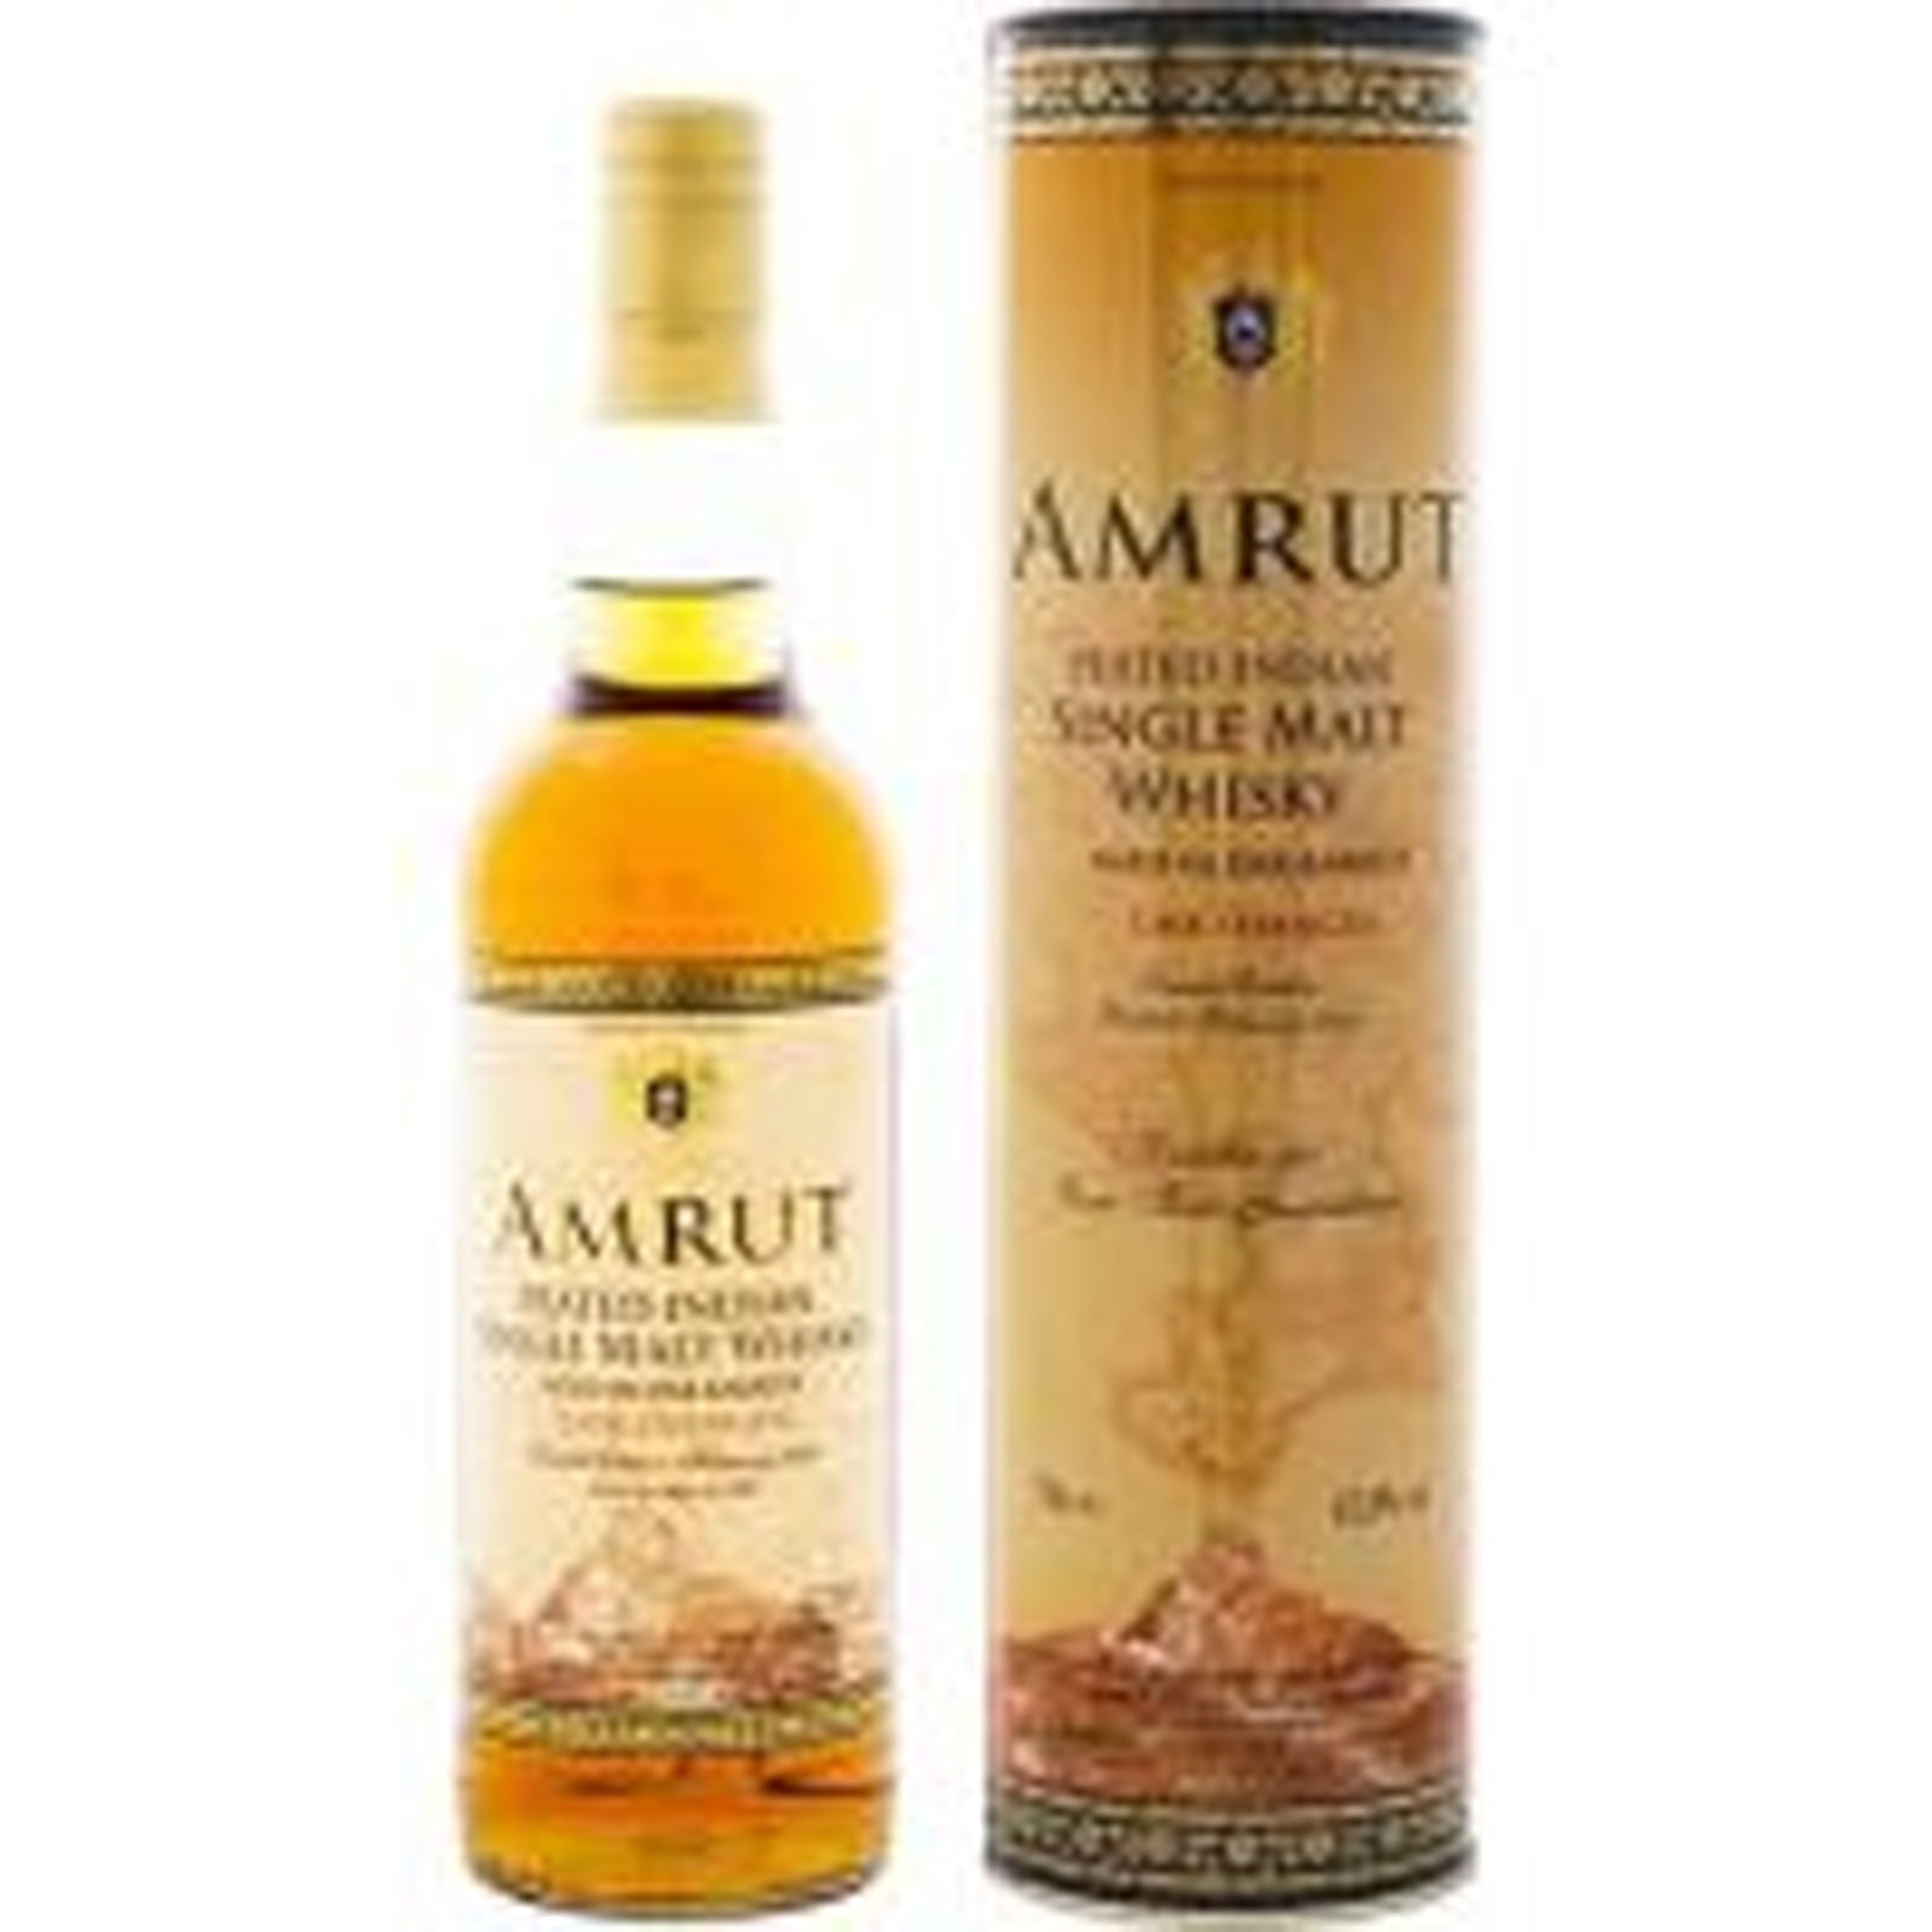 Amrut Indian Peated Single Malt Whisky Cask Strength